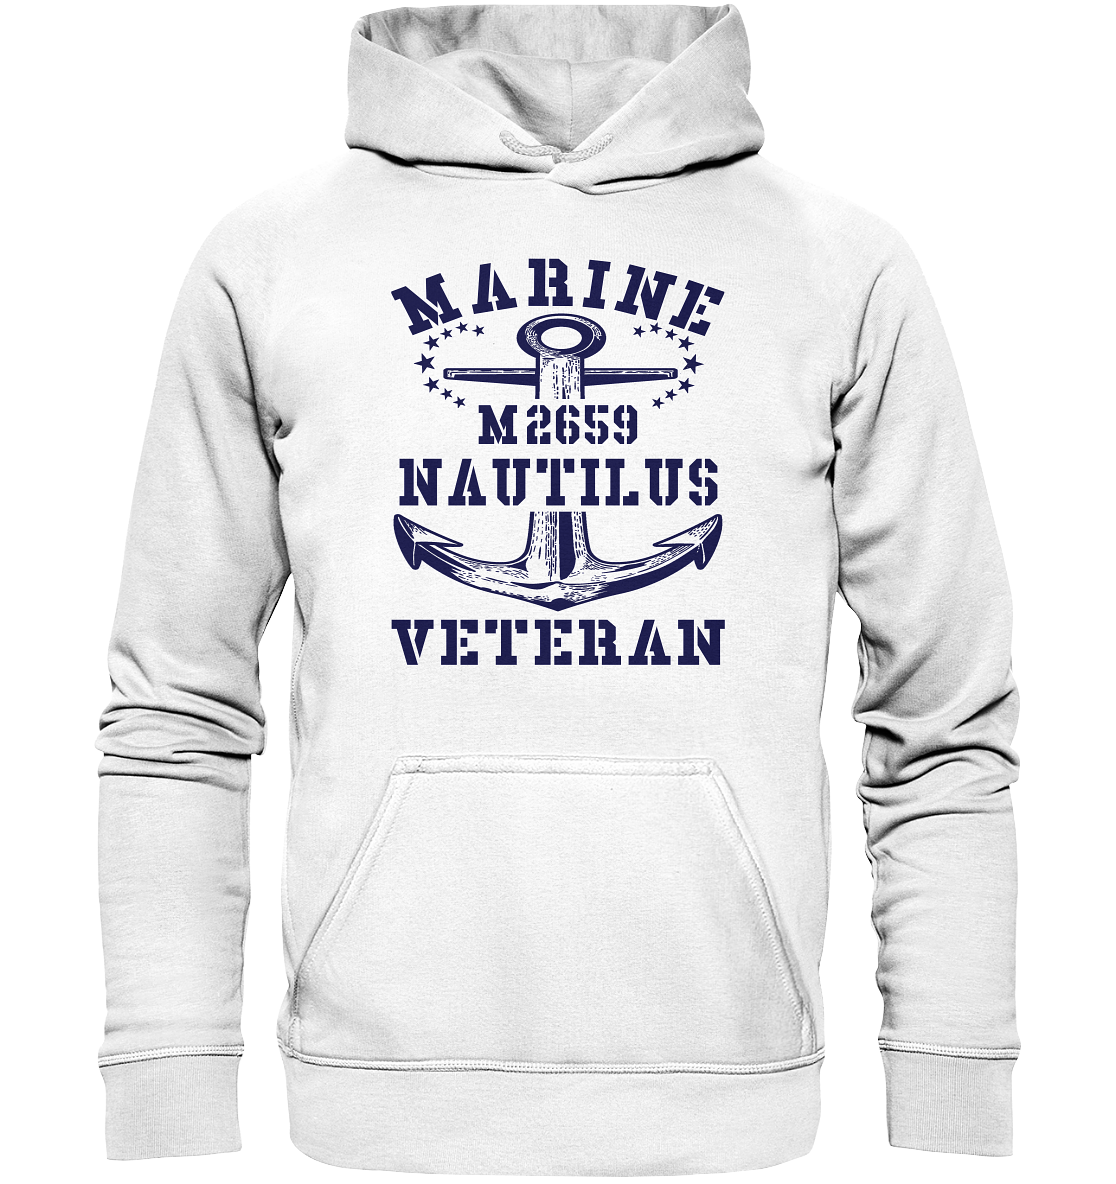 BiMi M2659 NAUTILUS Marine Veteran - Basic Unisex Hoodie